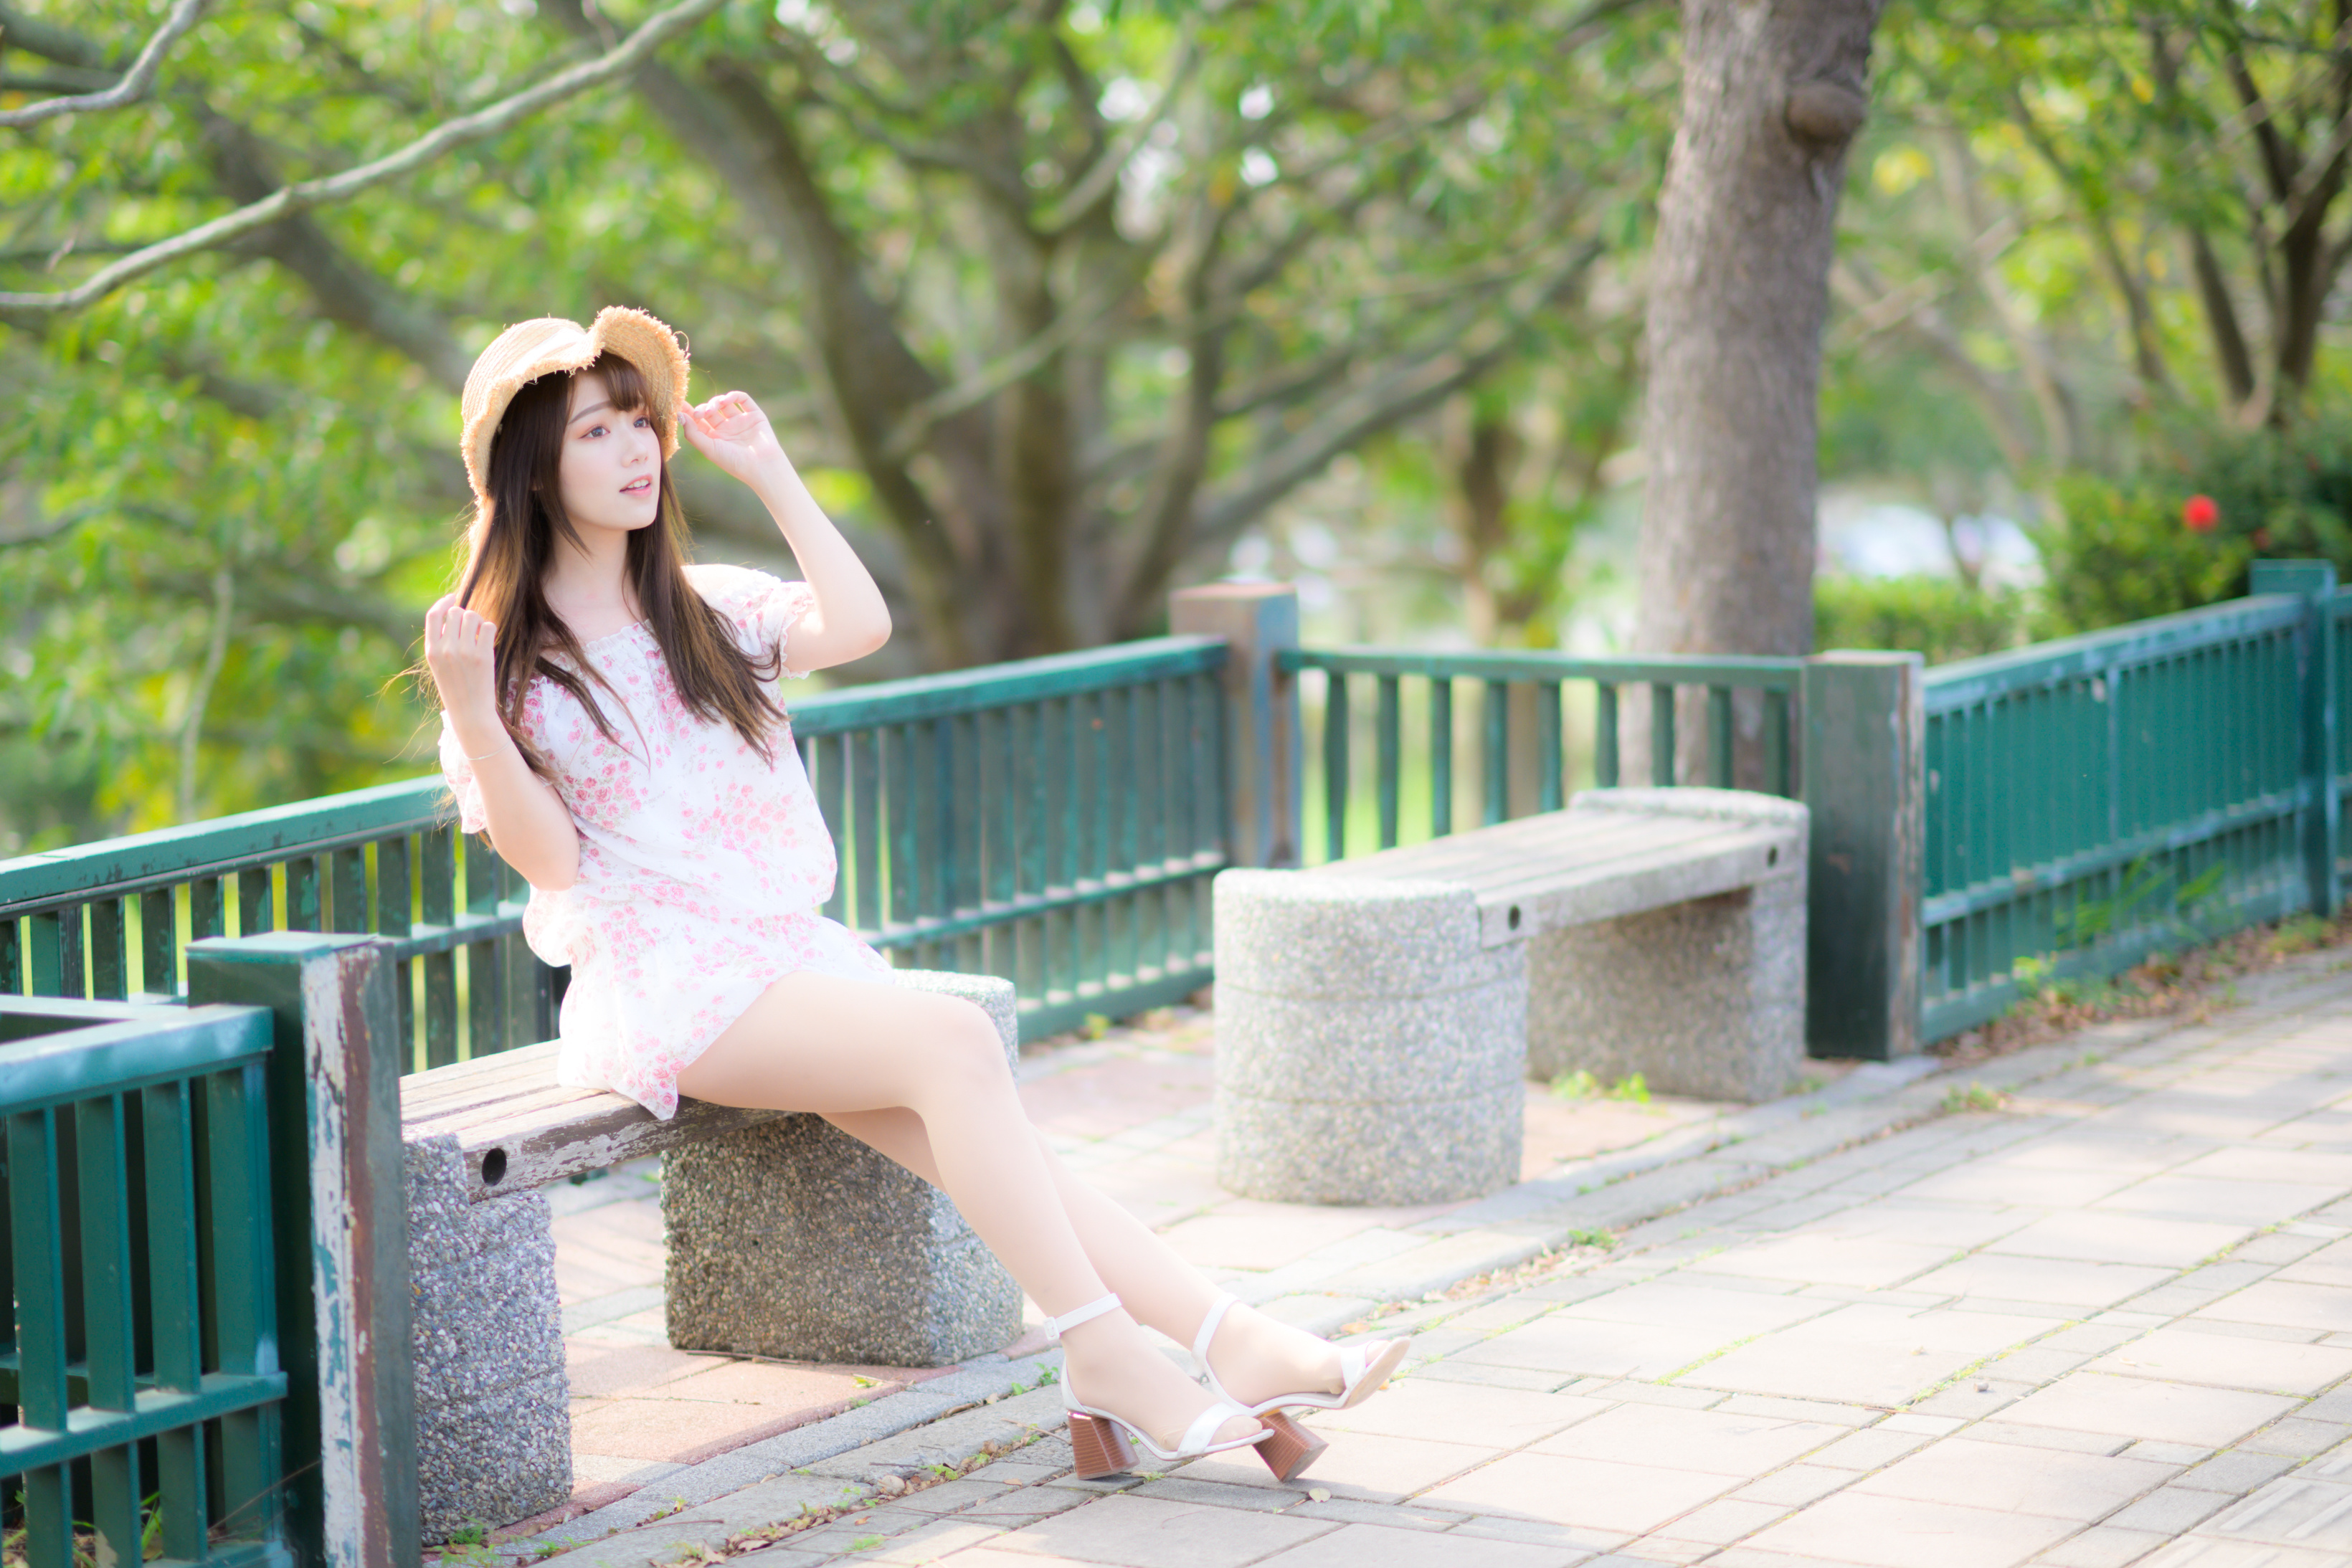 People 3280x2187 Asian model women long hair dark hair sitting depth of field straw hat bench trees Vicky (Asian model)